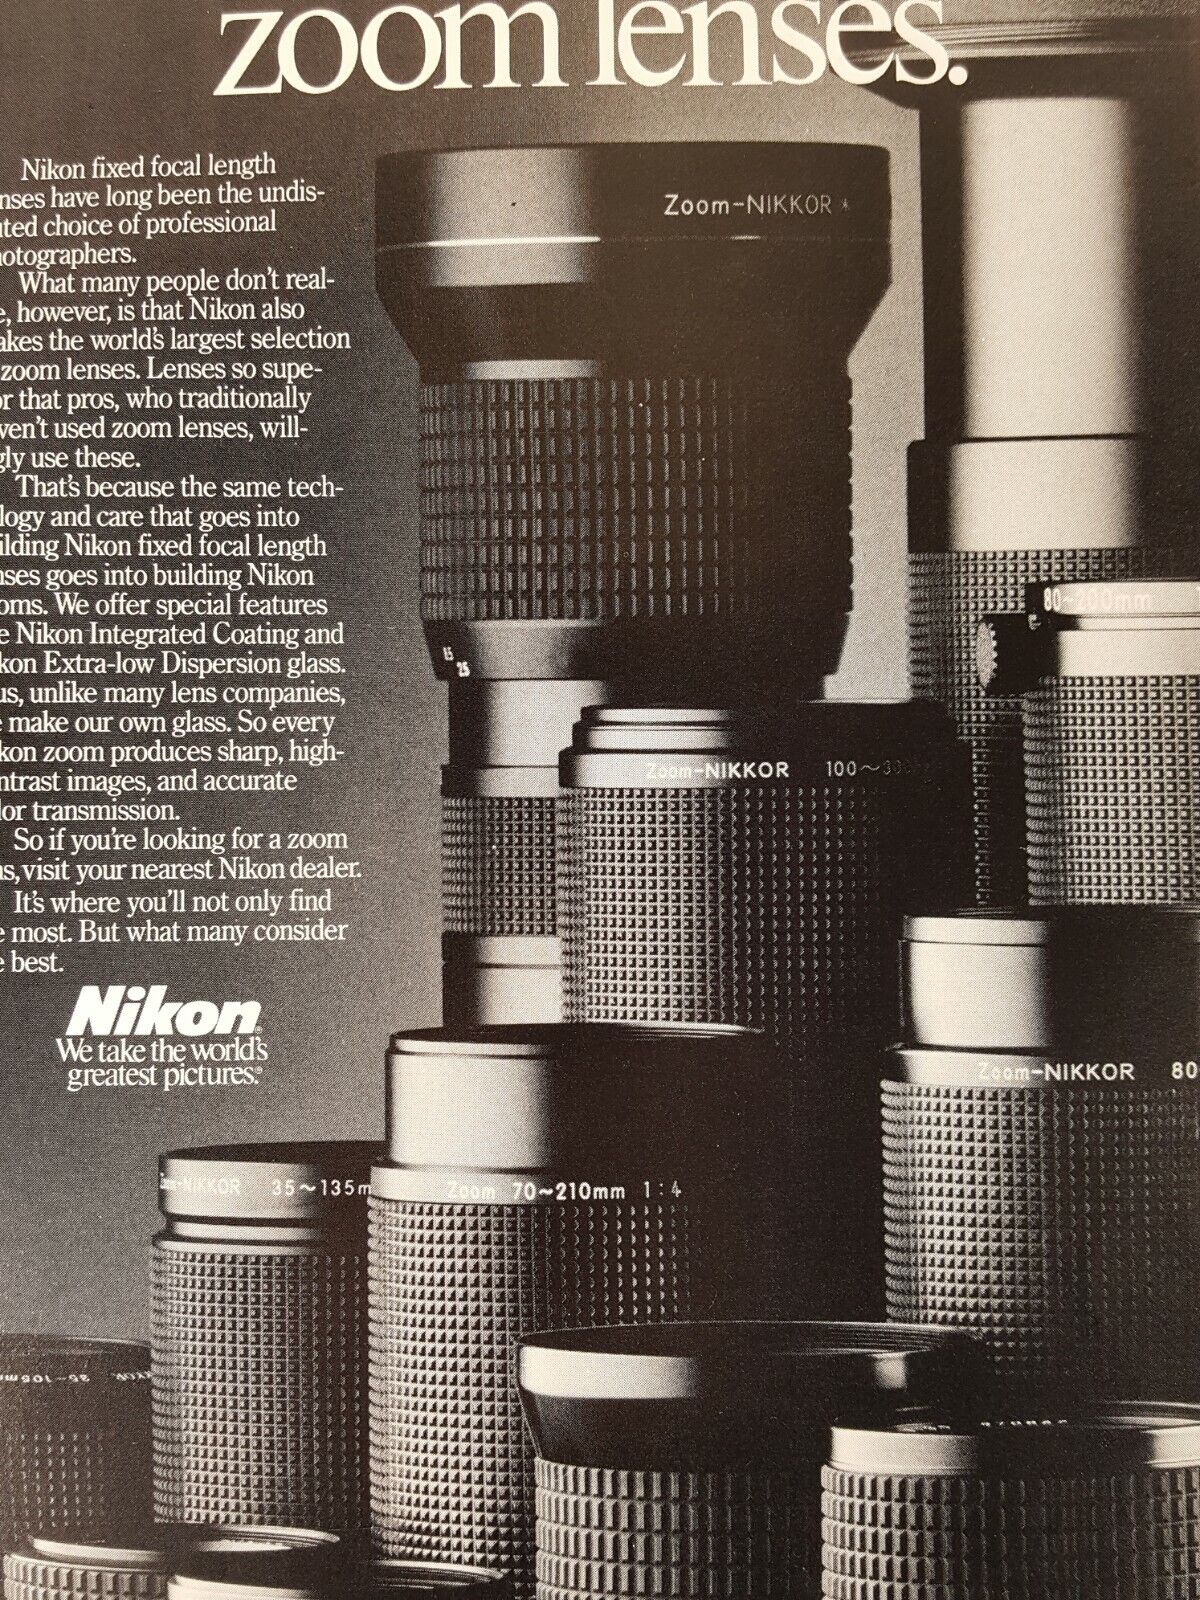 Print Ad Nikon Long Short Zoom Lenses 1986 Vintage Advertising from Nat Geo Mag